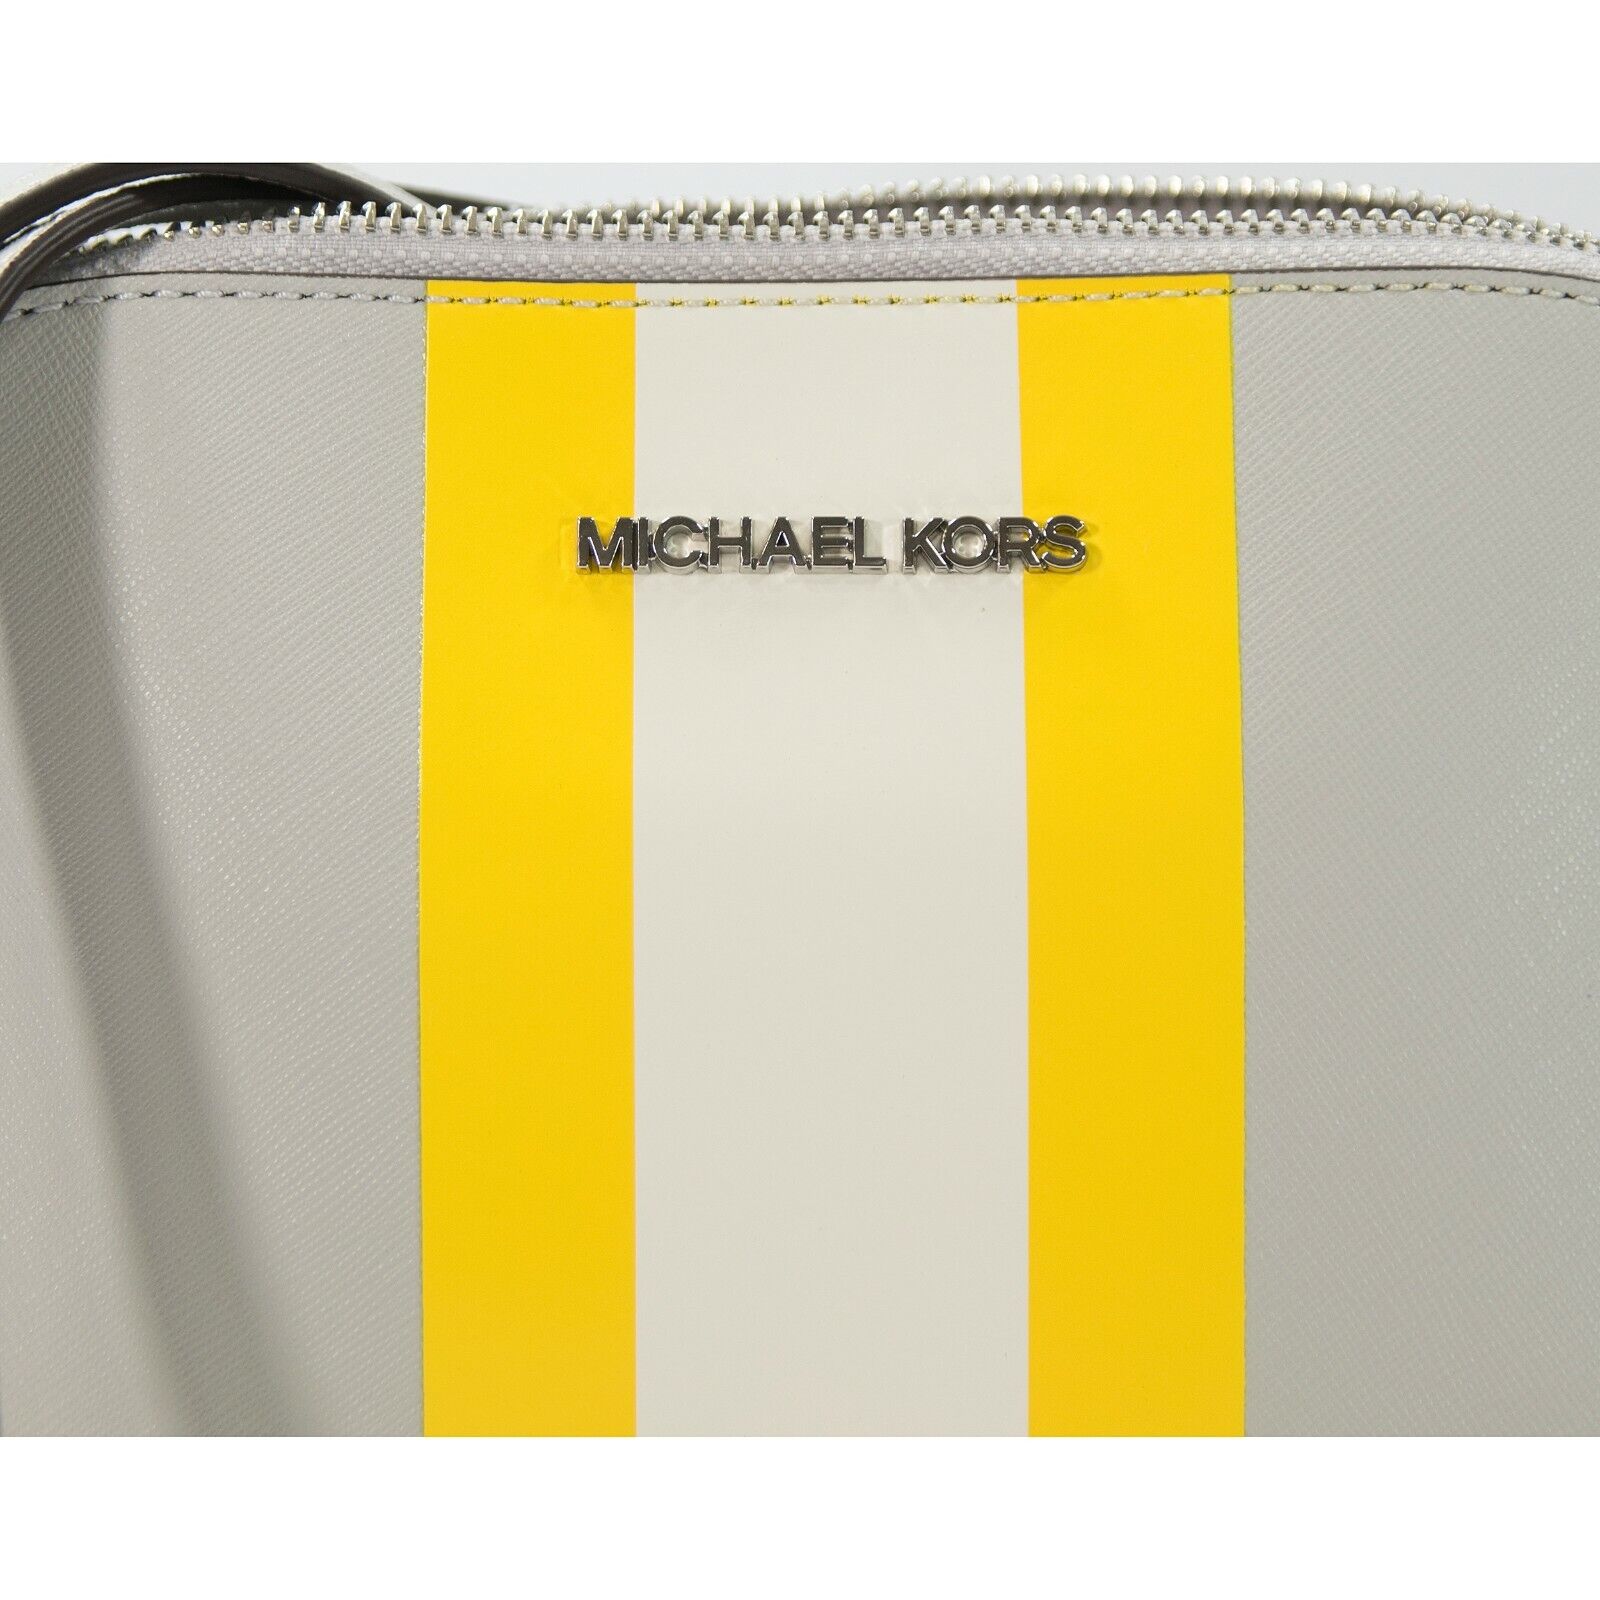 Michael Kors Aluminum Saffiano Leather Cindy Large Dome Crossbody Bag –  Design Her Boutique